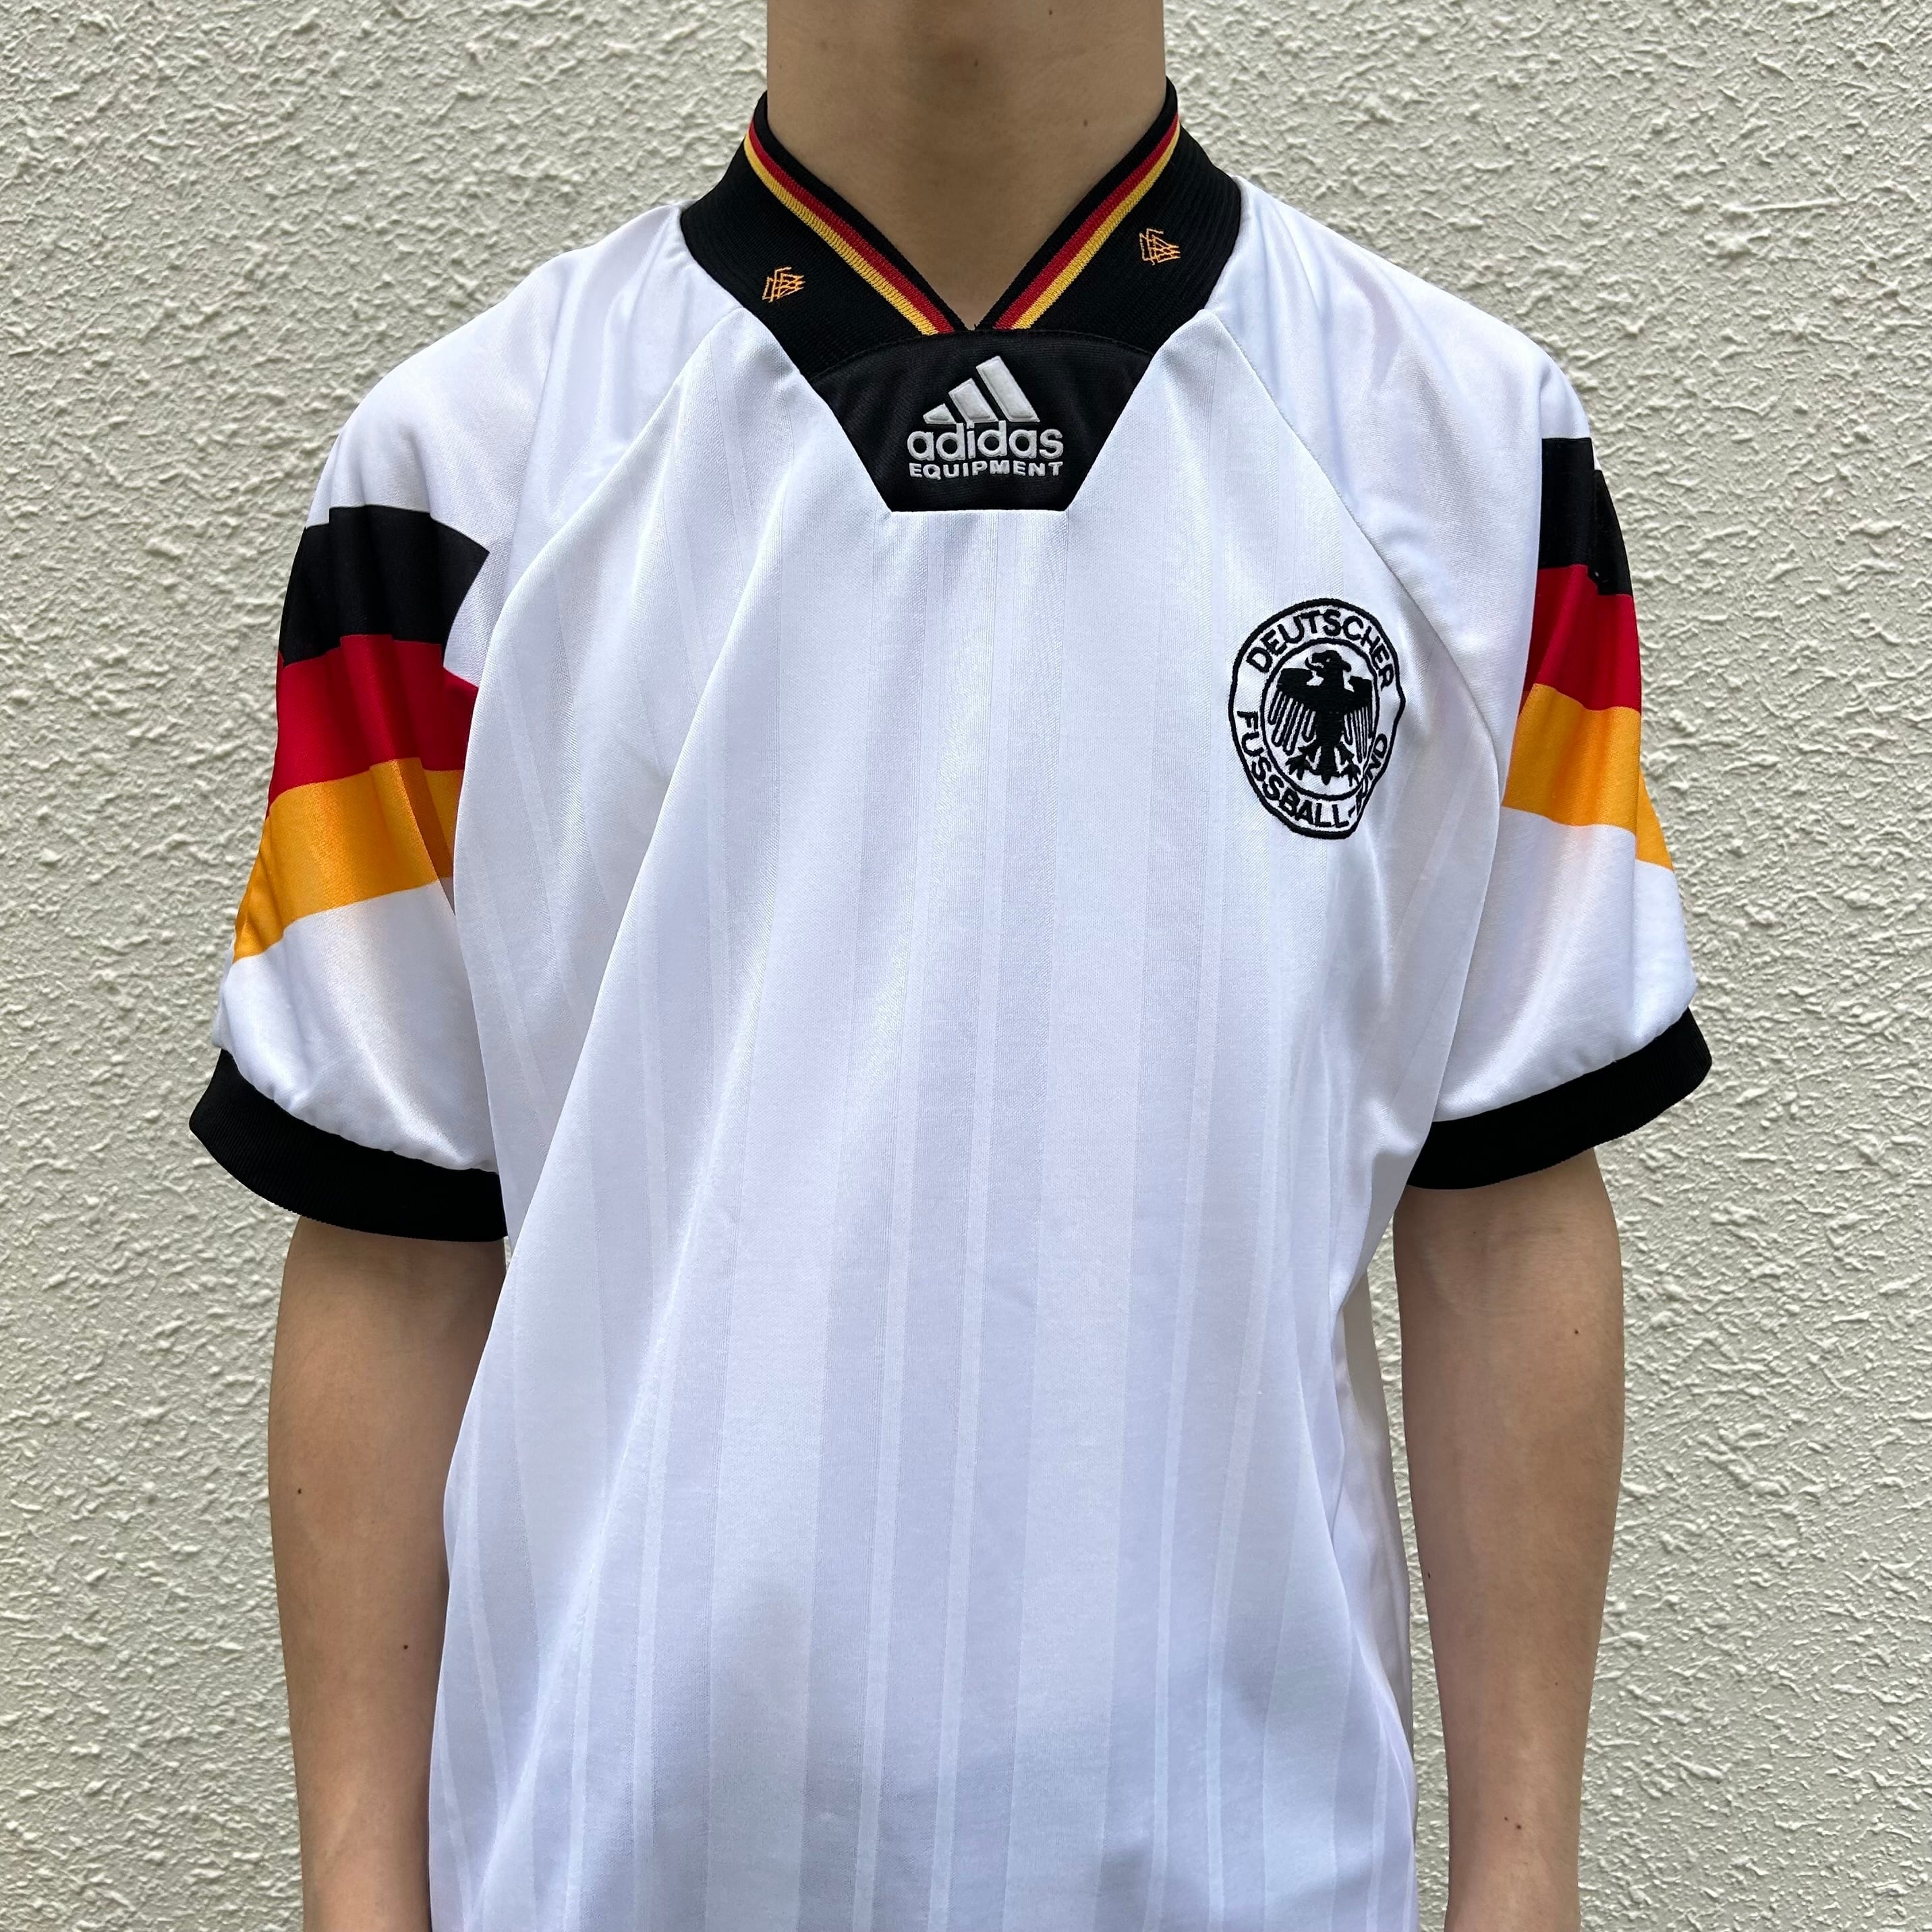 90s Adidas game shirt made in U.K. uniform soccer football europe